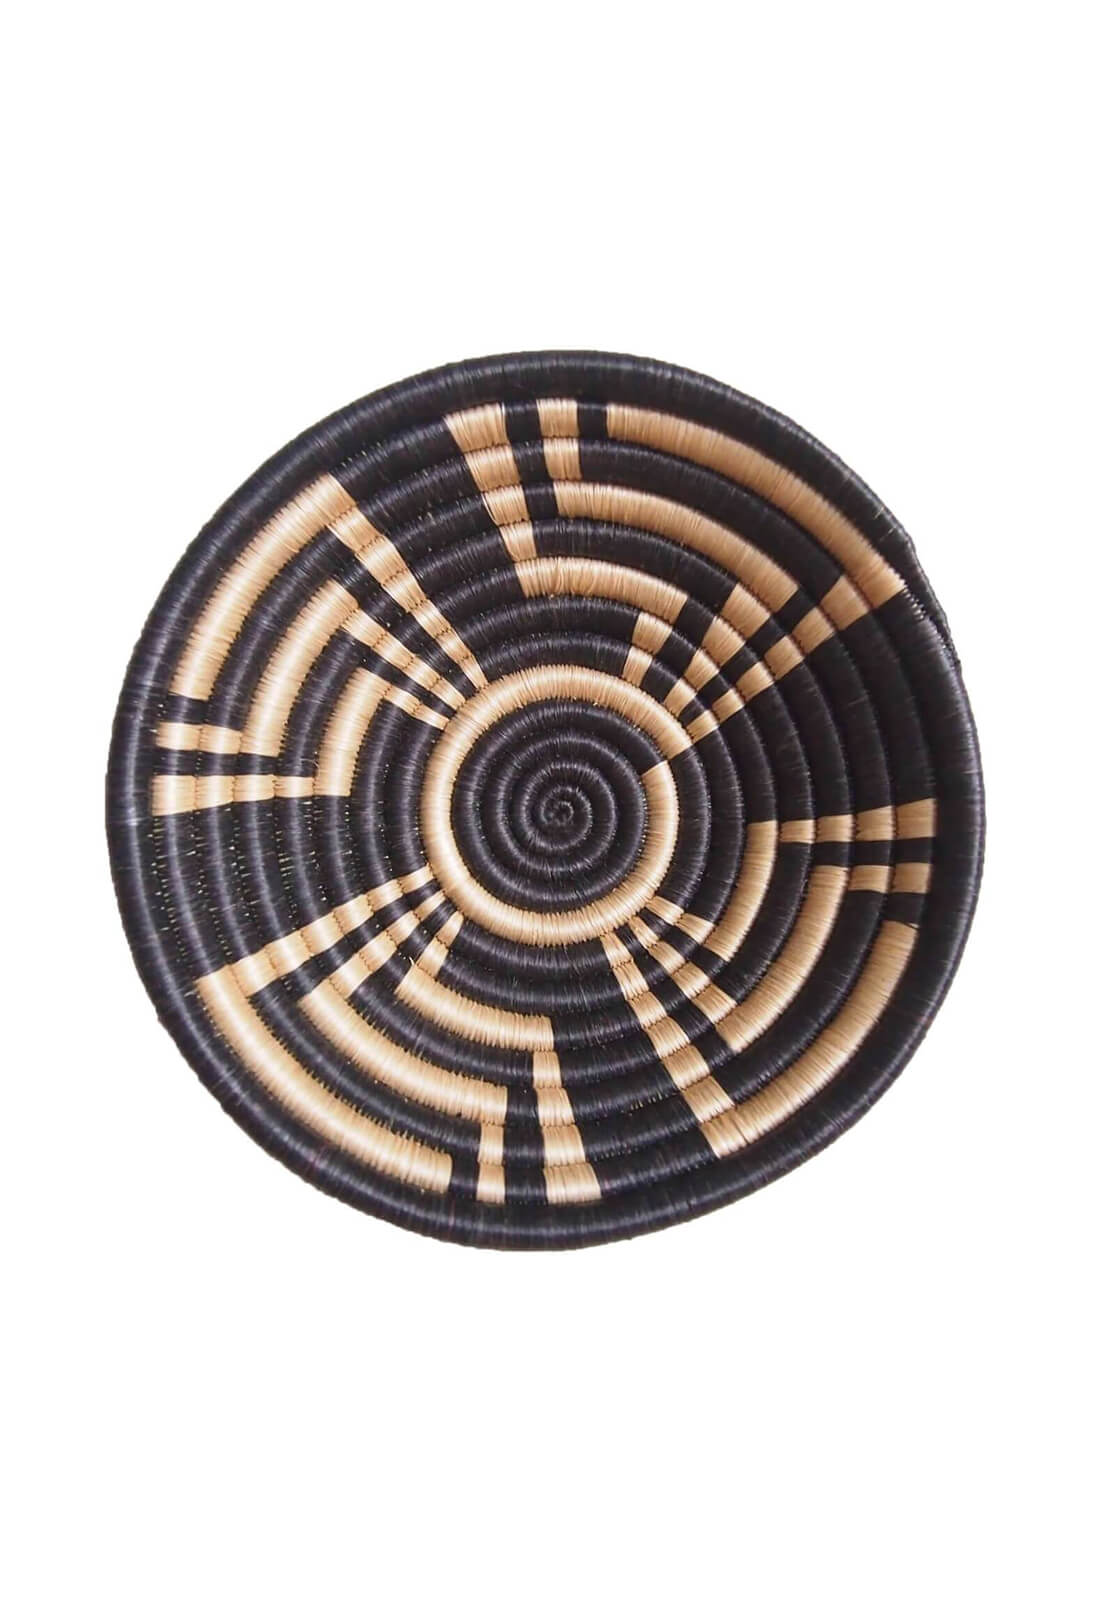 Hand Woven Musoma Basket - Black and Tan, Small